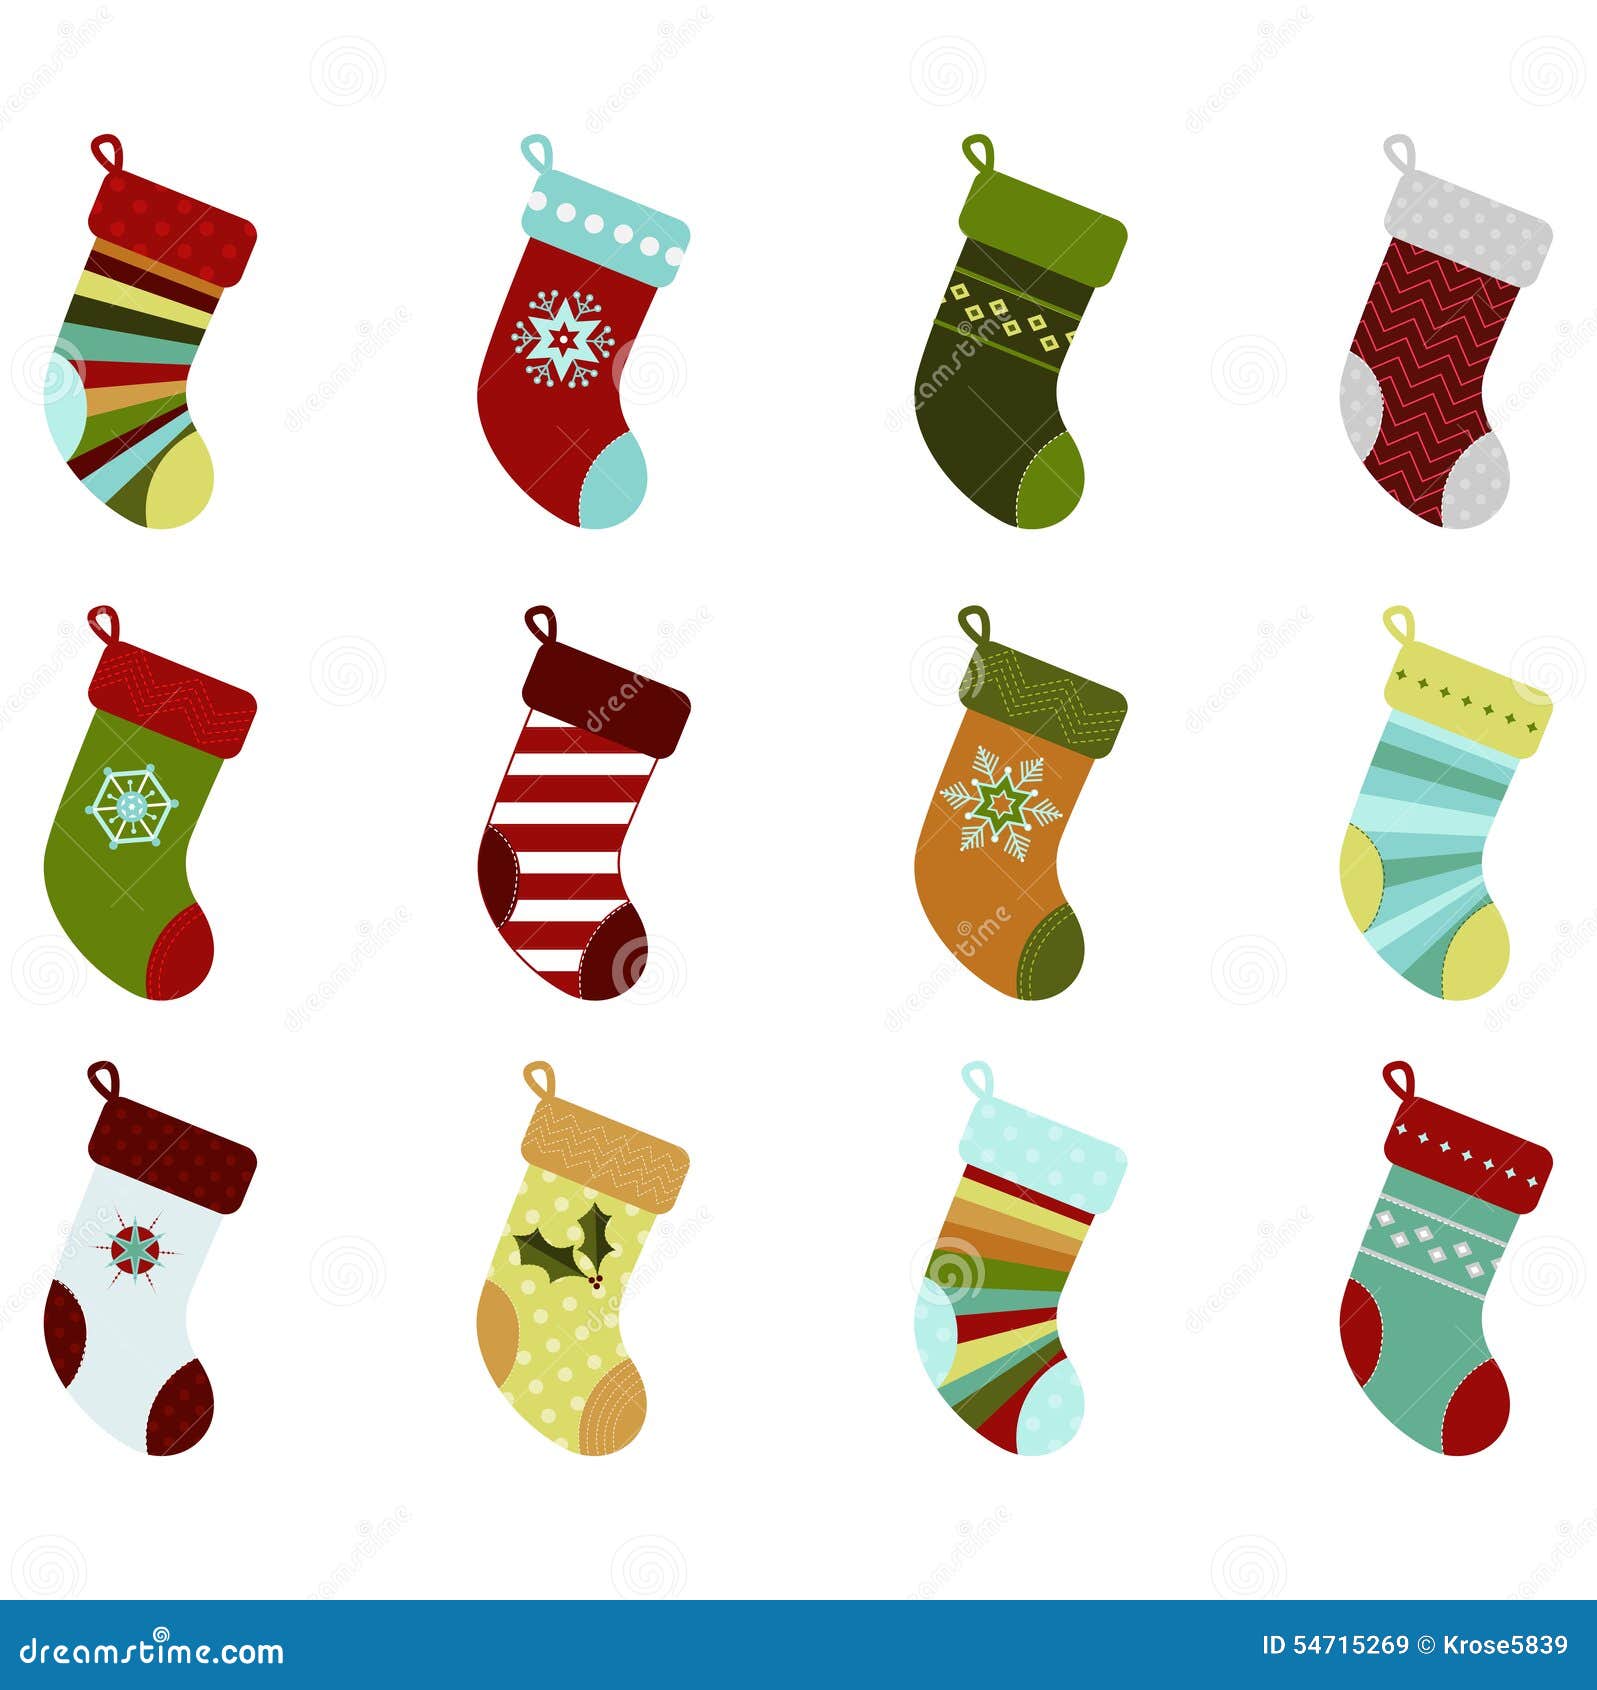 Retro Christmas Stockings stock vector. Illustration of stocking - 54715269